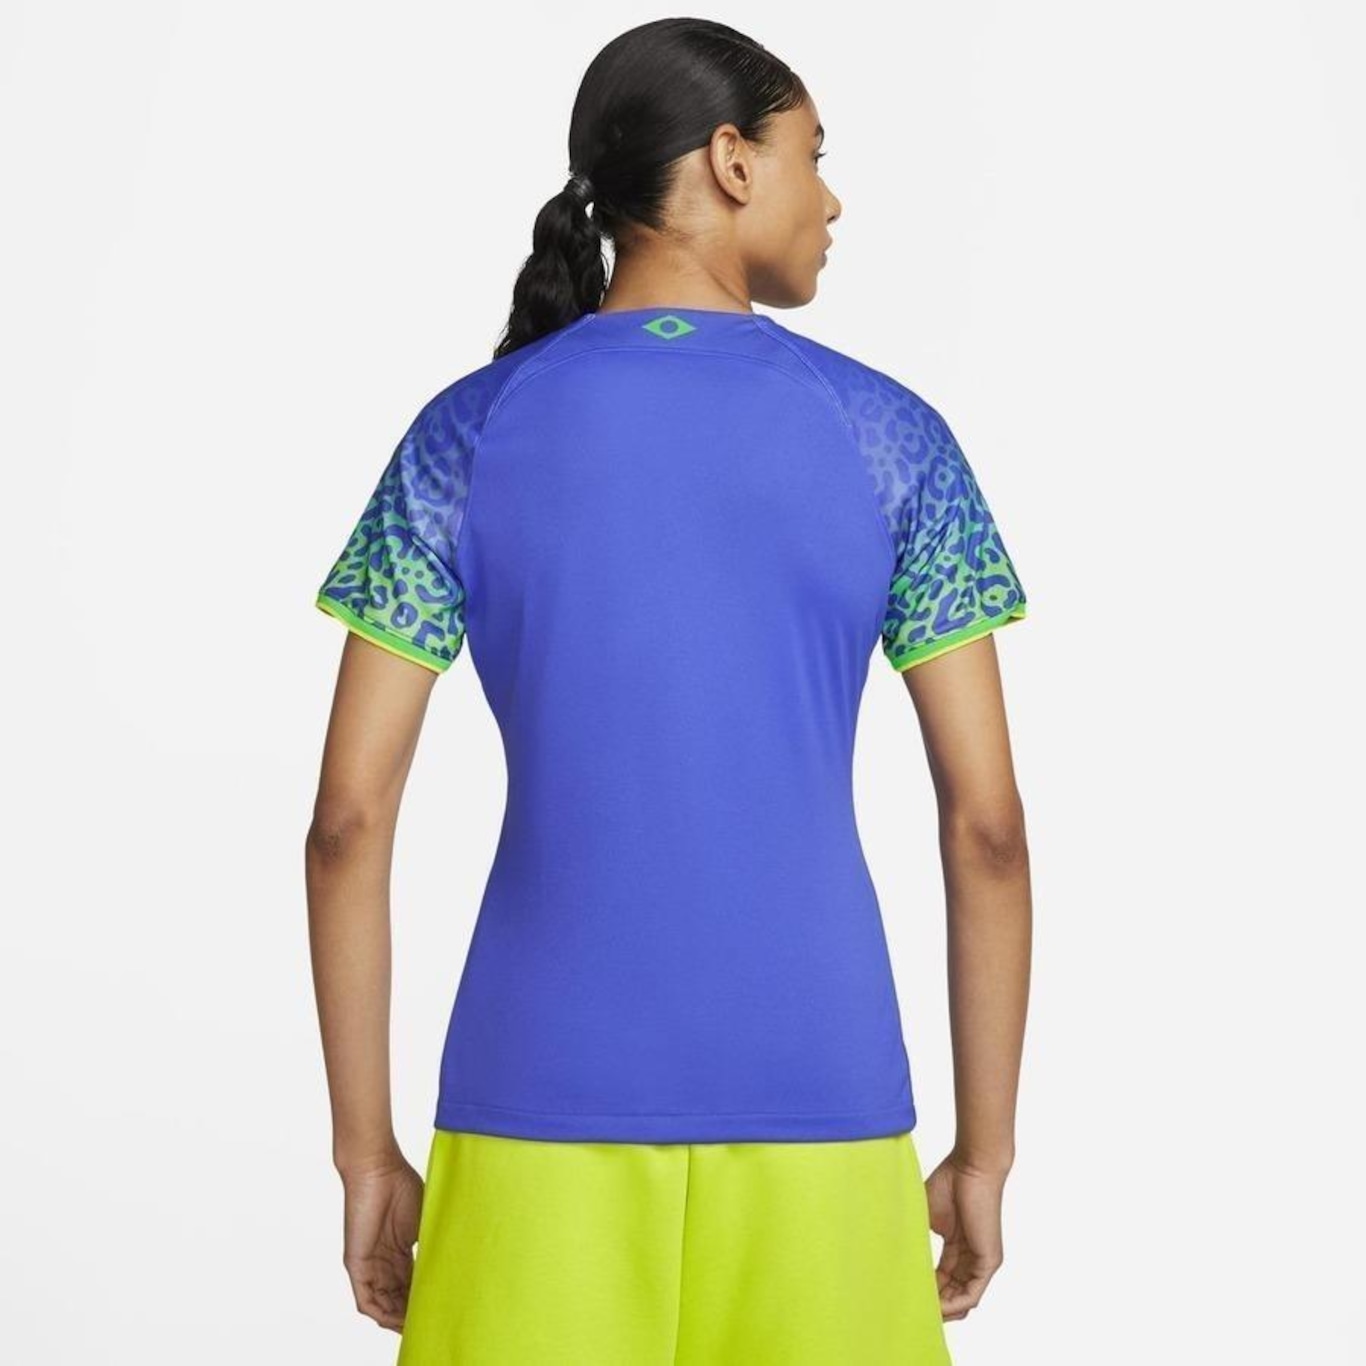 Camisa do Brasil Nike Torcedora Pro II 22/23 - Feminina em